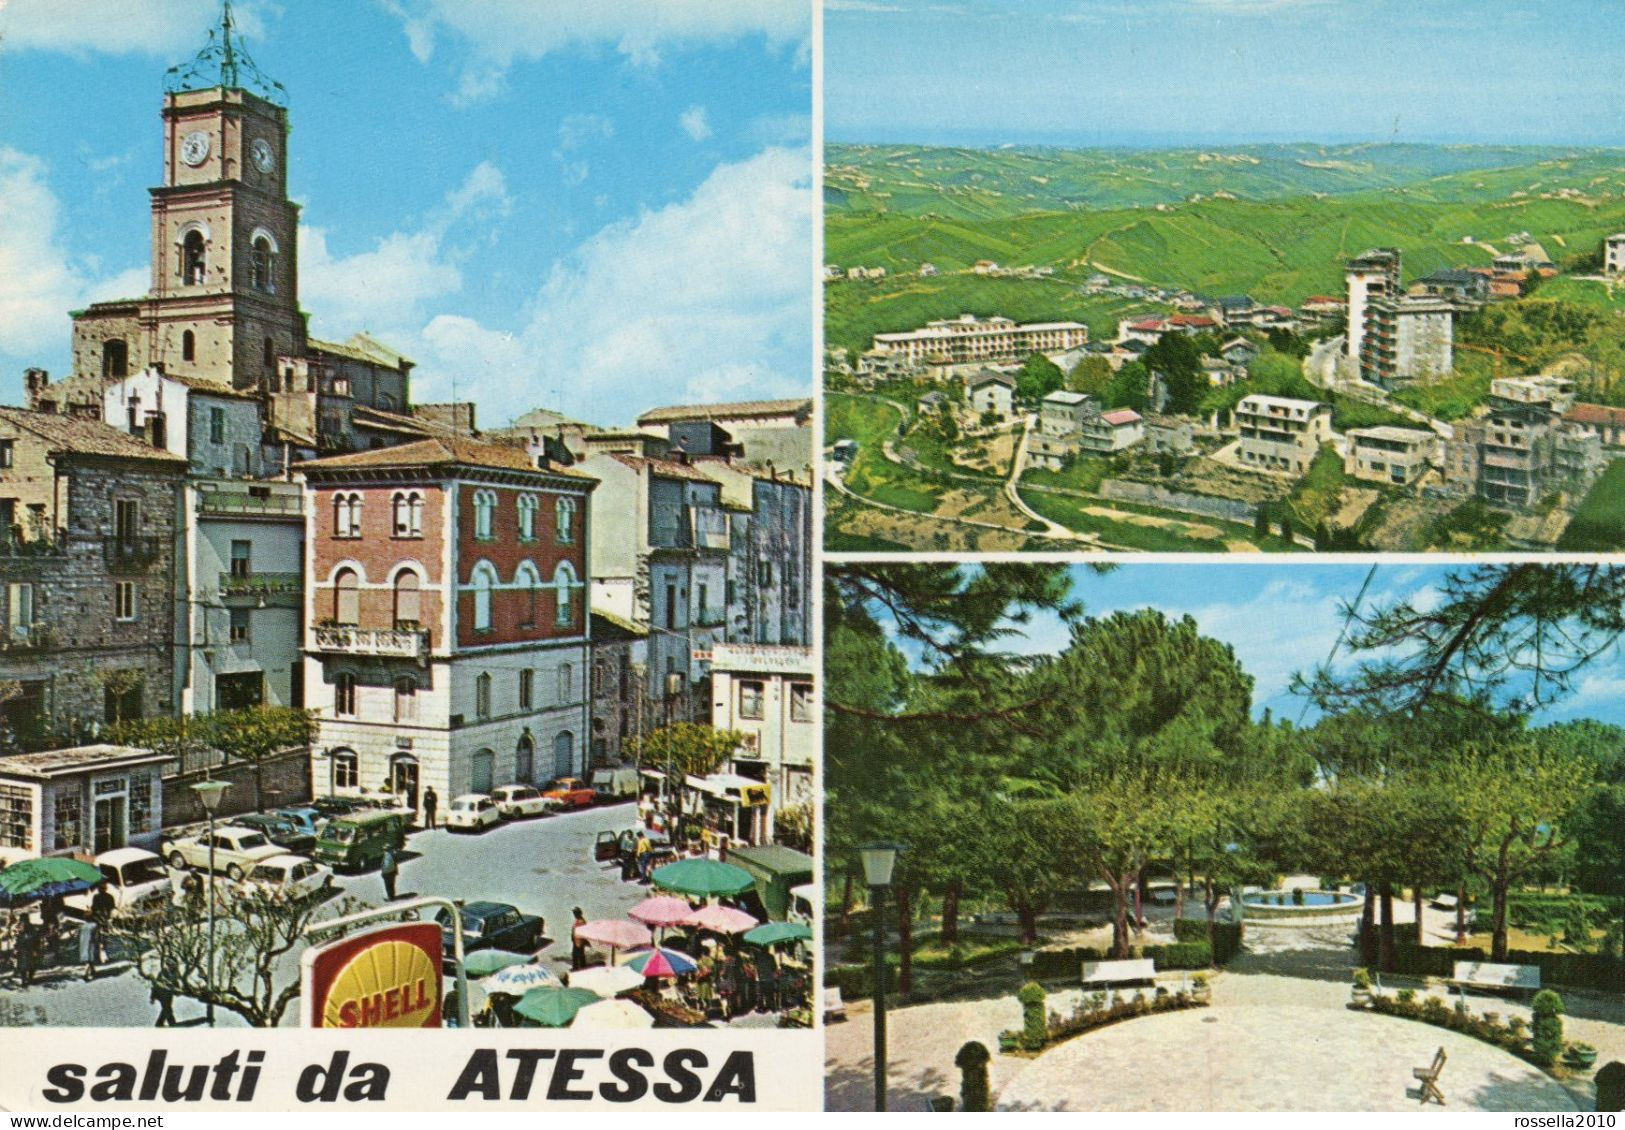 CARTOLINA ITALIA 1990 CHIETI ATESSA SALUTI VEDUTINE INSEGNA SHELL Italy Postcard ITALIEN Ansichtskarten - Chieti